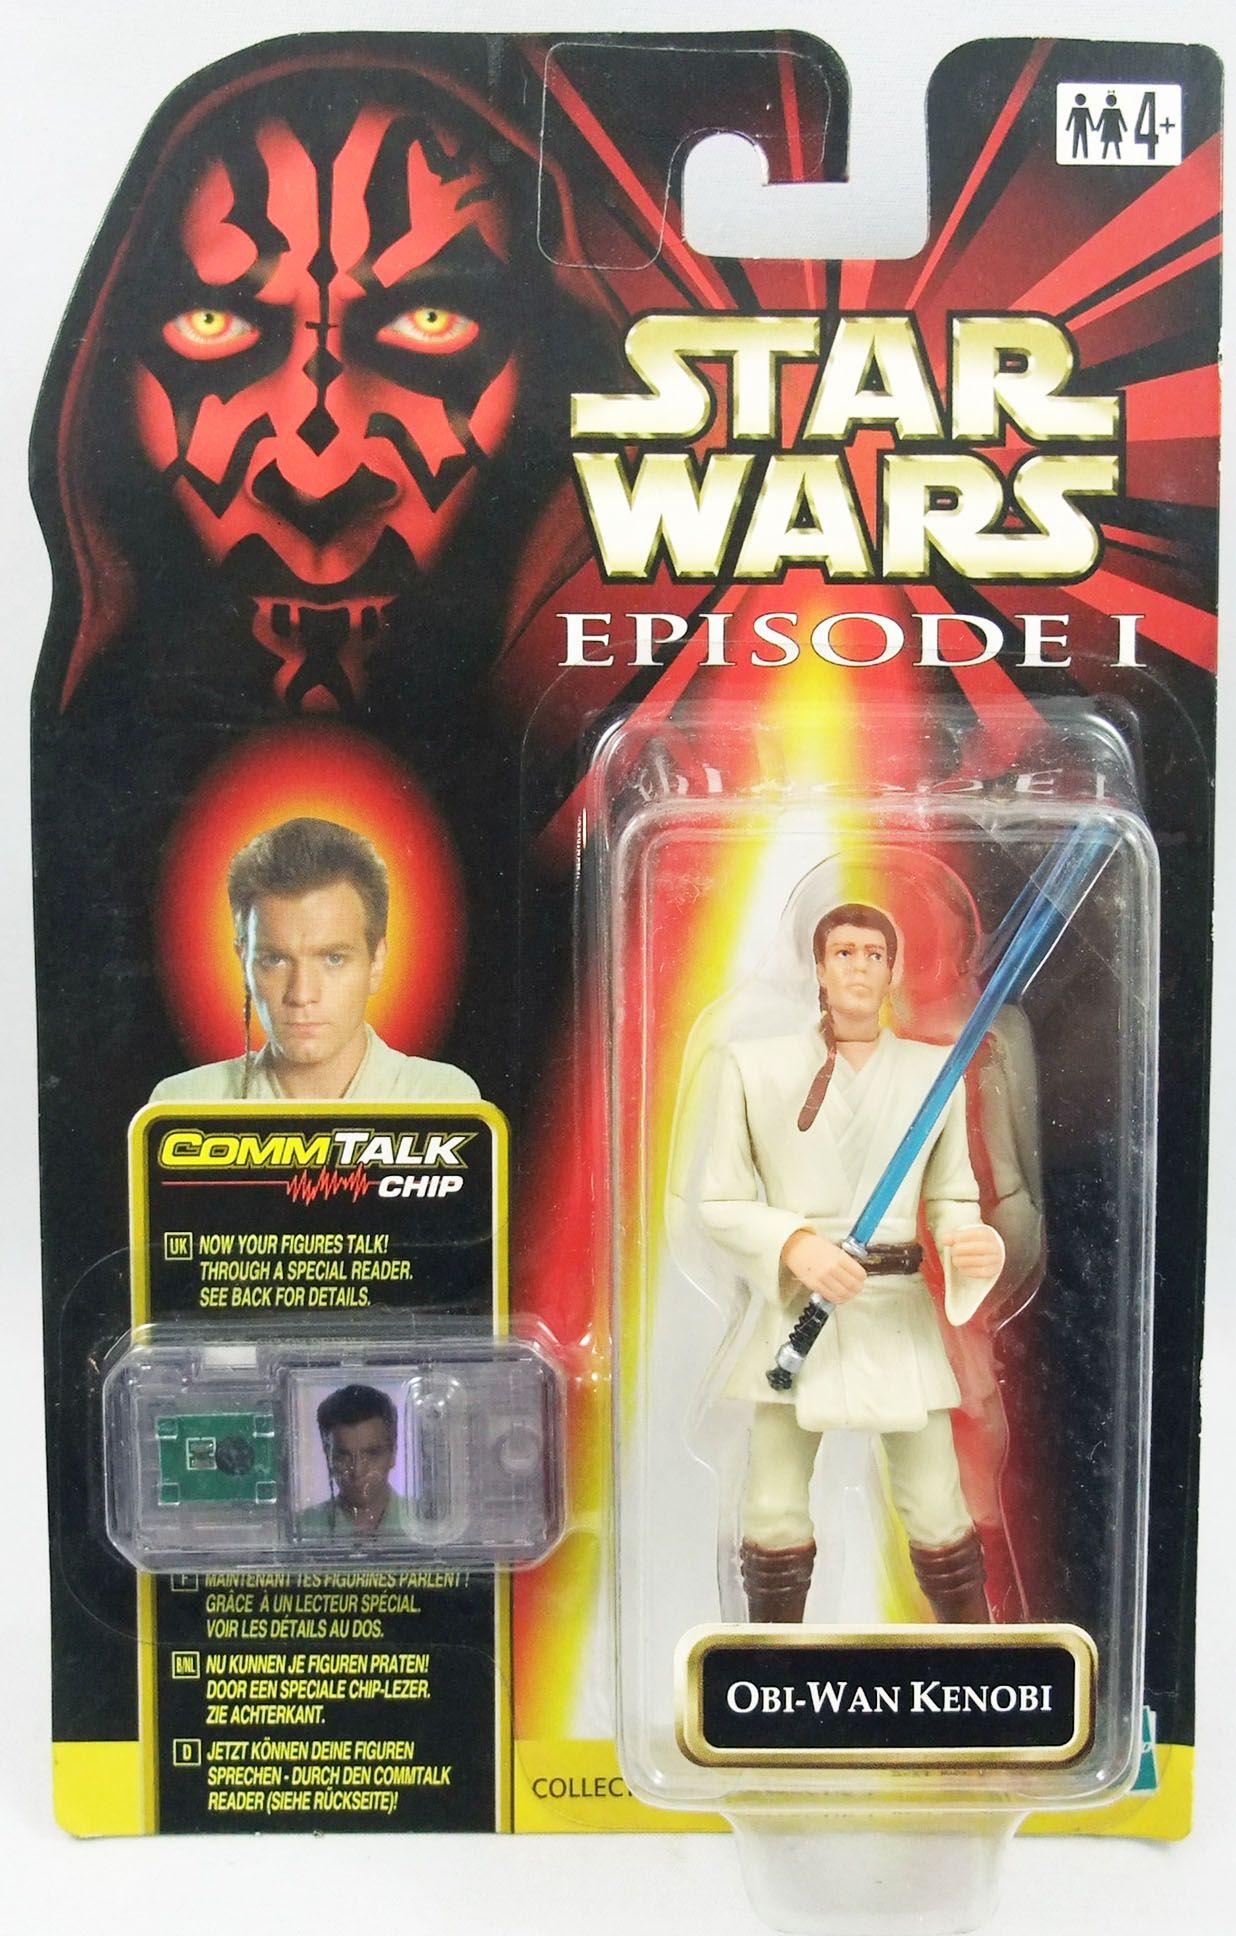 Episode 1 Hasbro Star Wars Obi-Wan Kenobi Jedi Duel Action Figure for sale online 